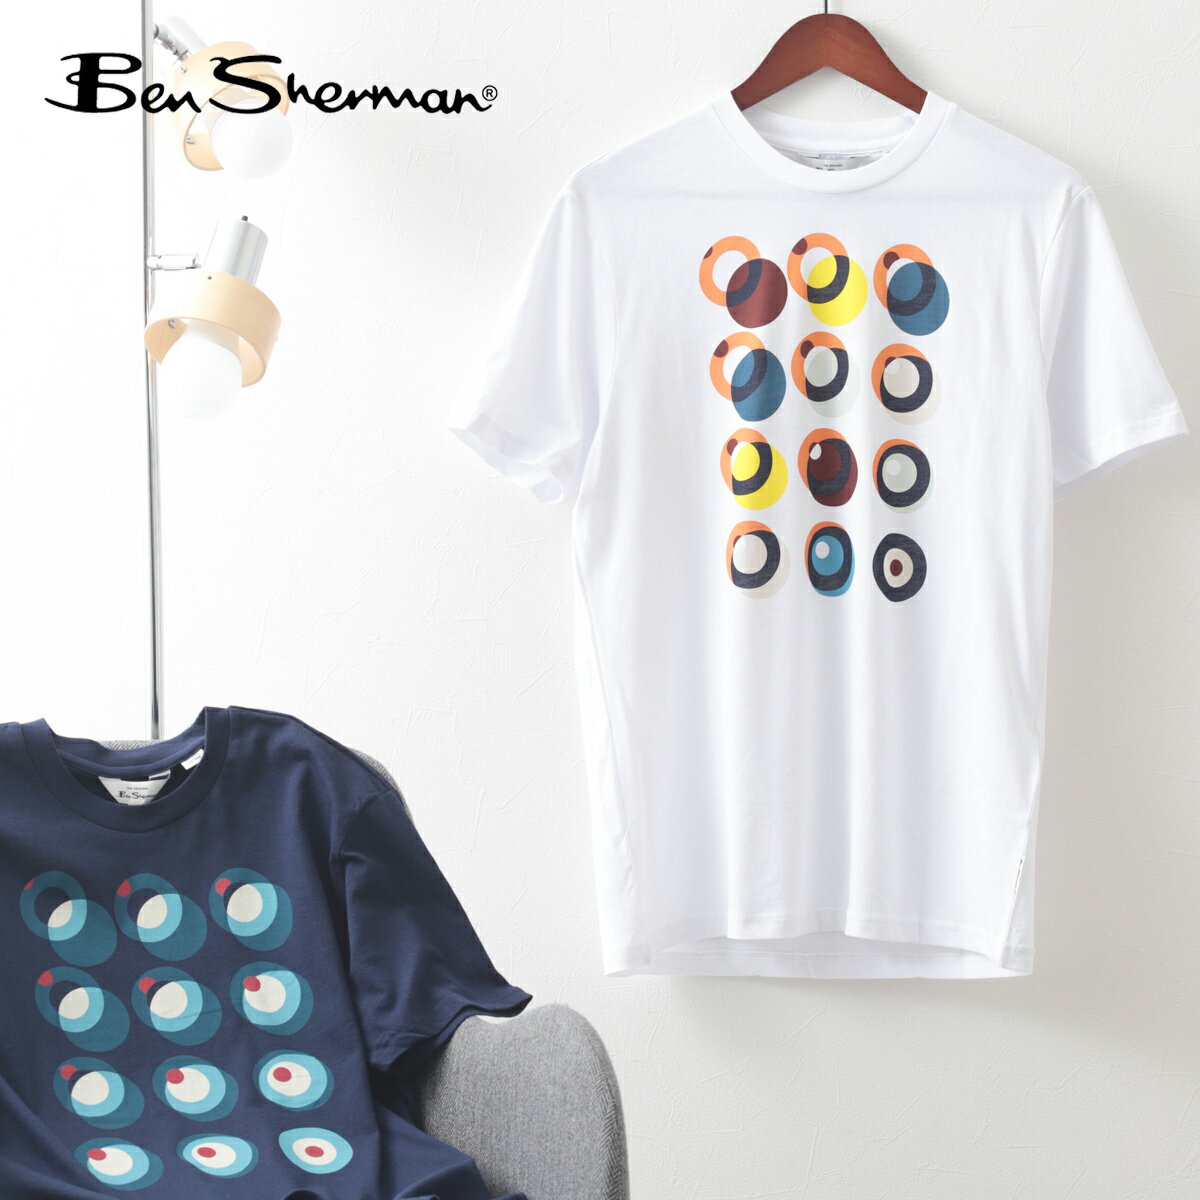 Ben Sherman ベンシャーマン メンズ Tシャツ ターゲットグラフィックプリント 2色 ネイビー ホワイト オーガニックコットン ターゲットマーク 半袖 レギュラーフィット クルーネック ギフト トラッド